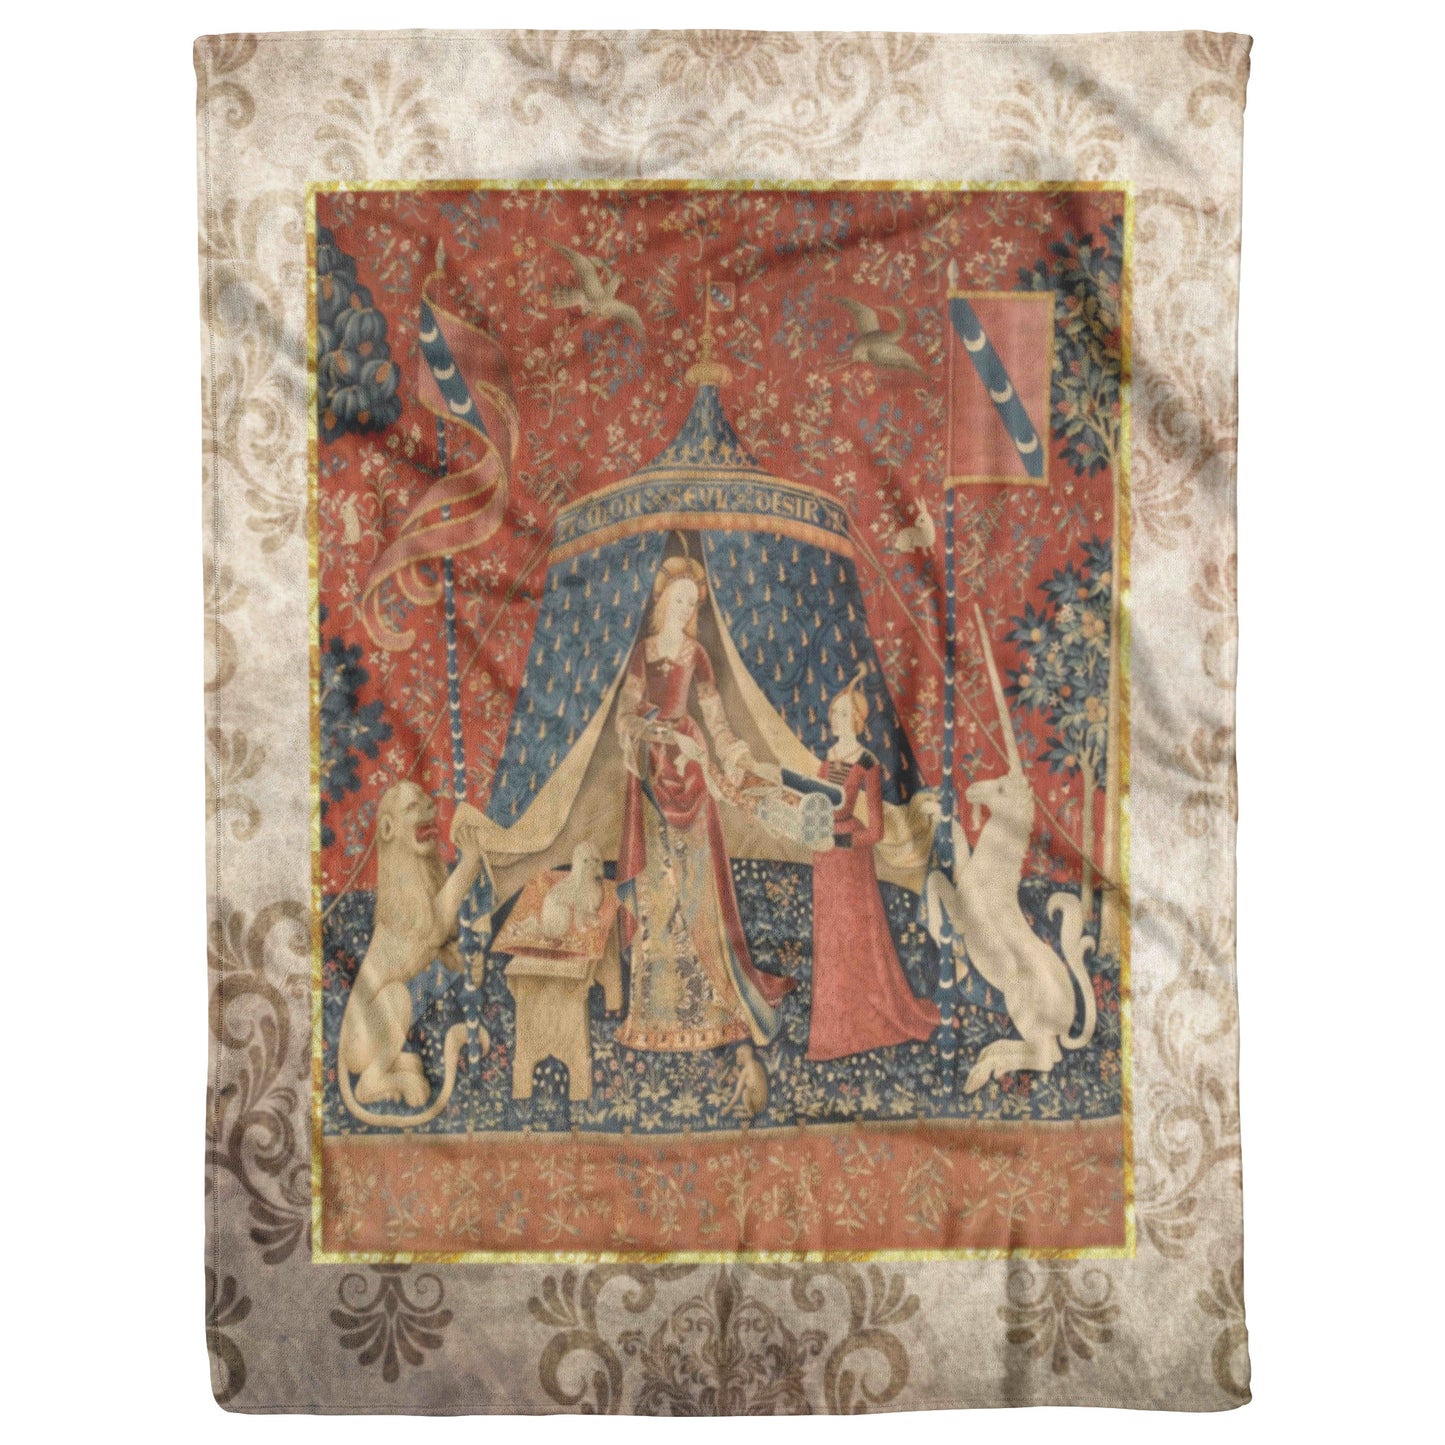 Lady and Unicorn Mon Seul Desir Fleece Blanket